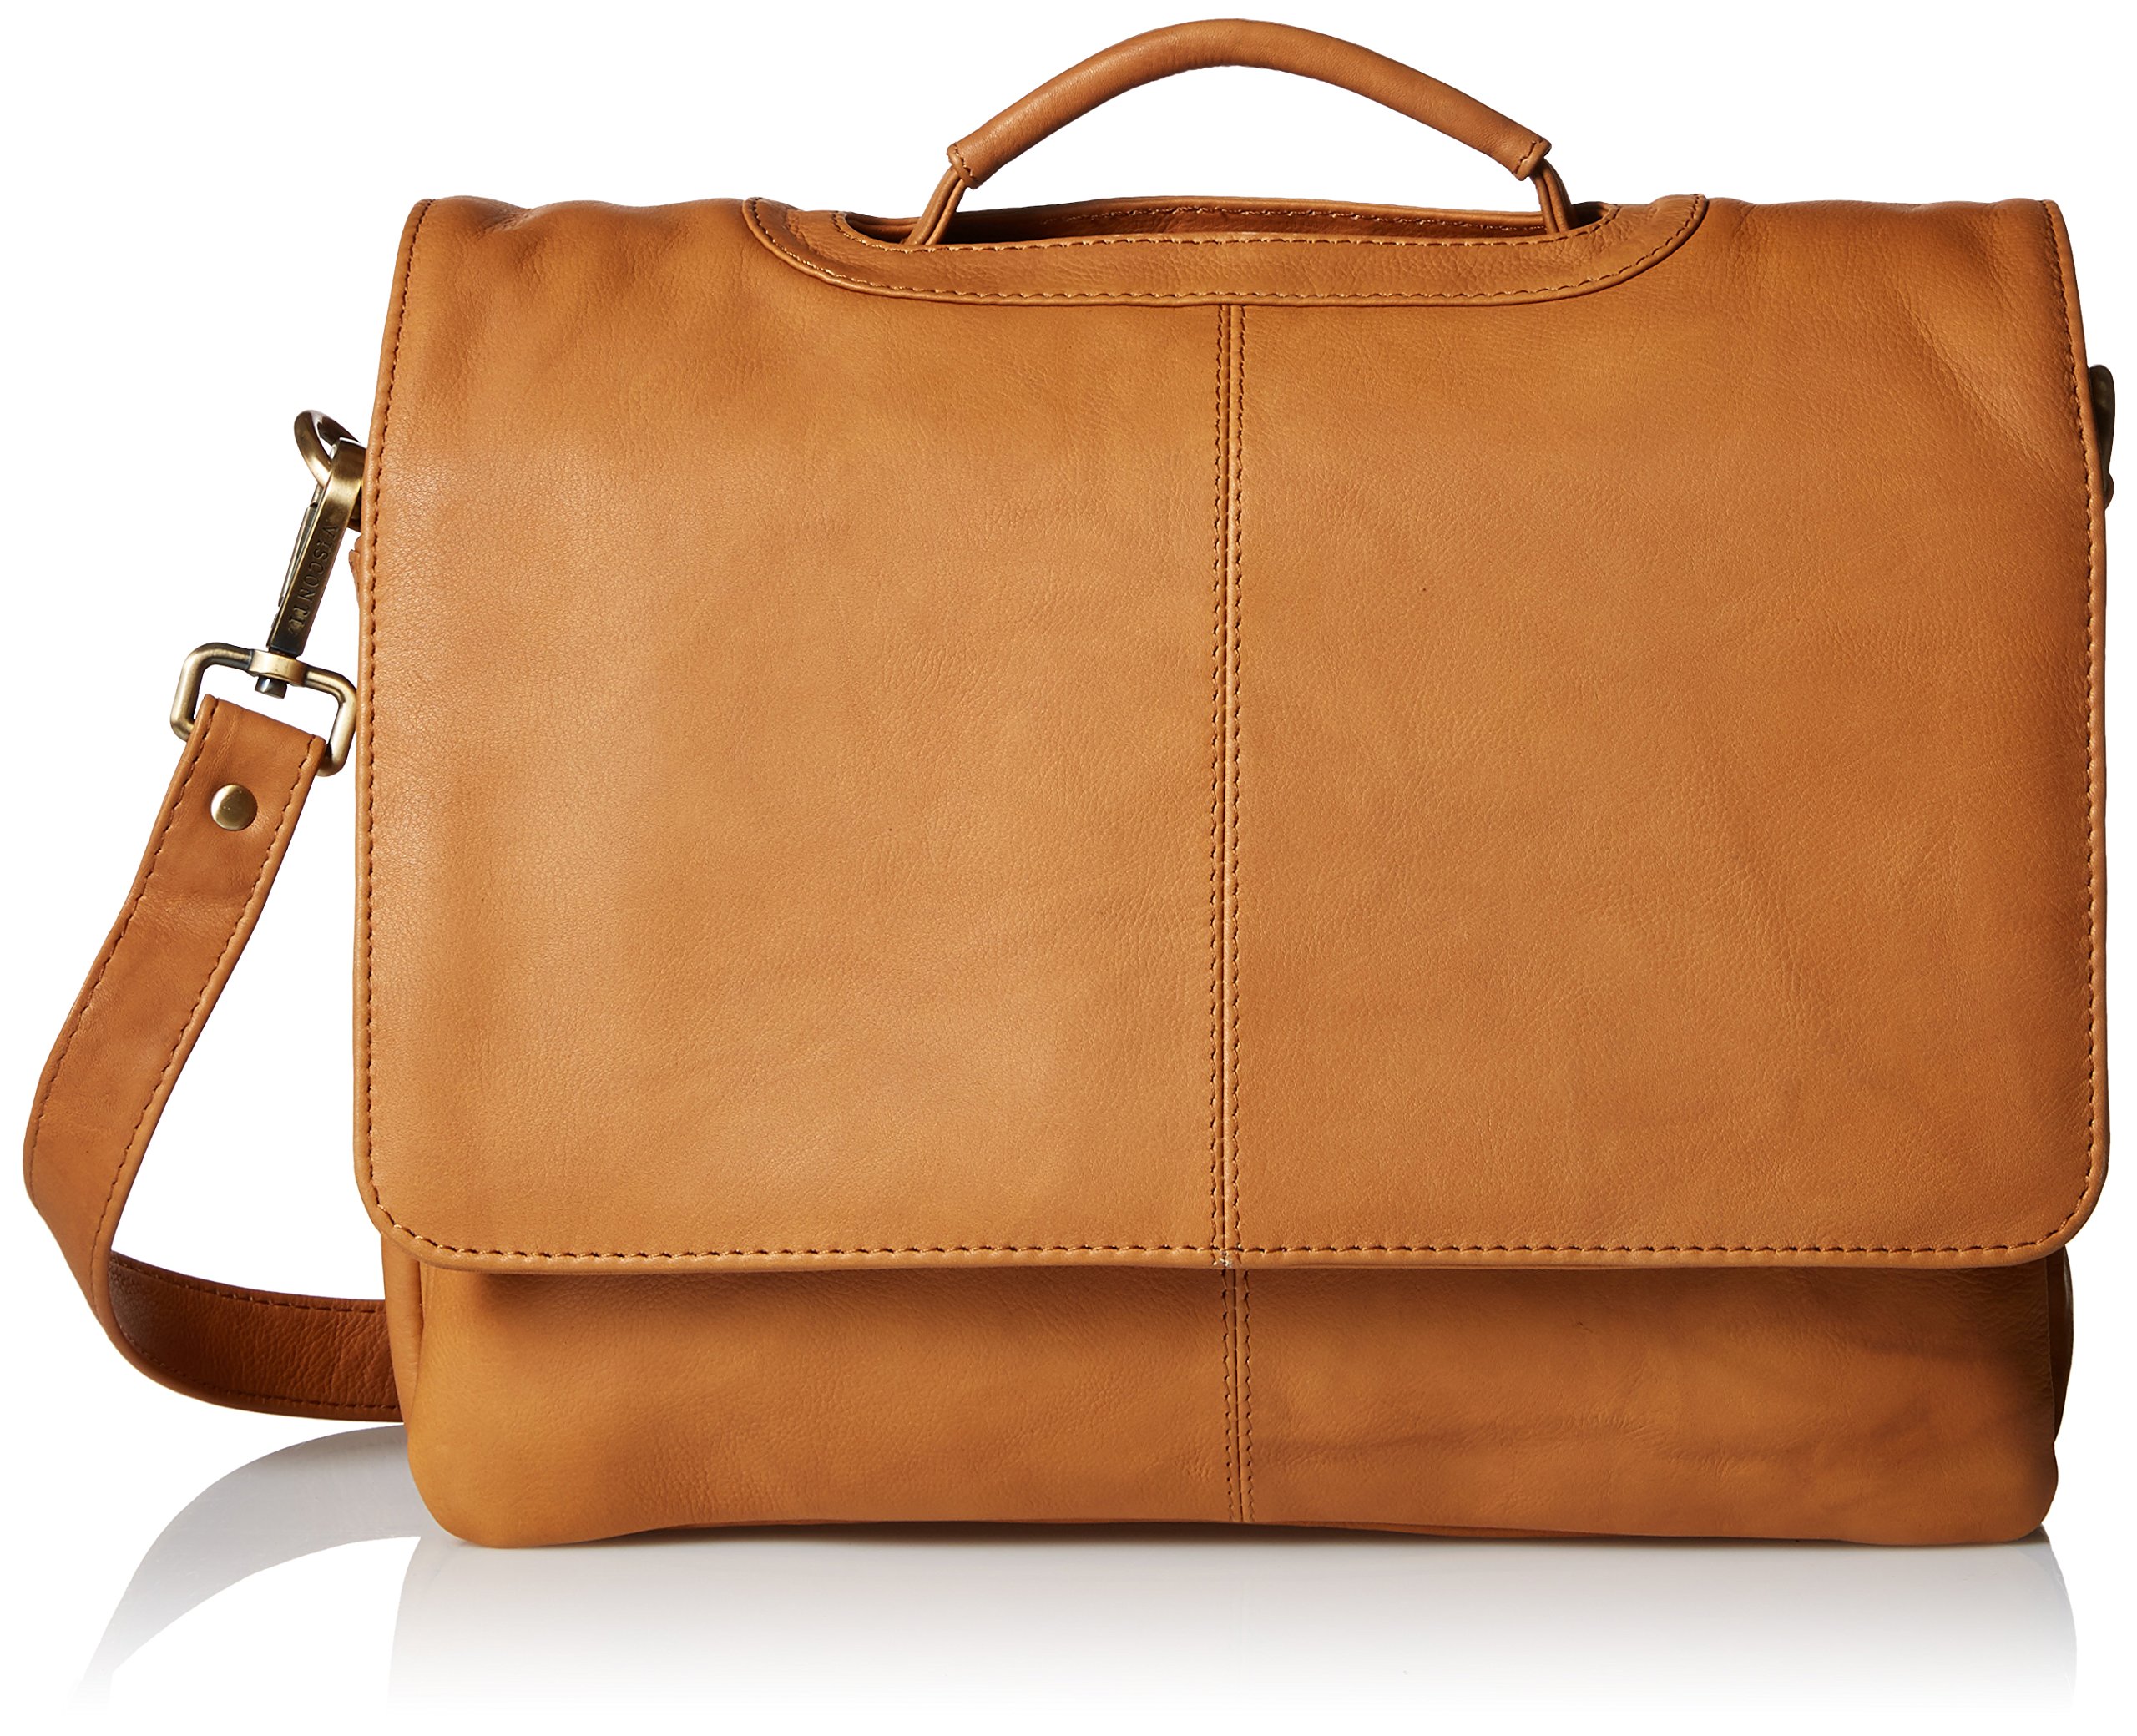 Visconti Leather Business Case Bag/Briefcase/Handbag Medium, Sand, One Size